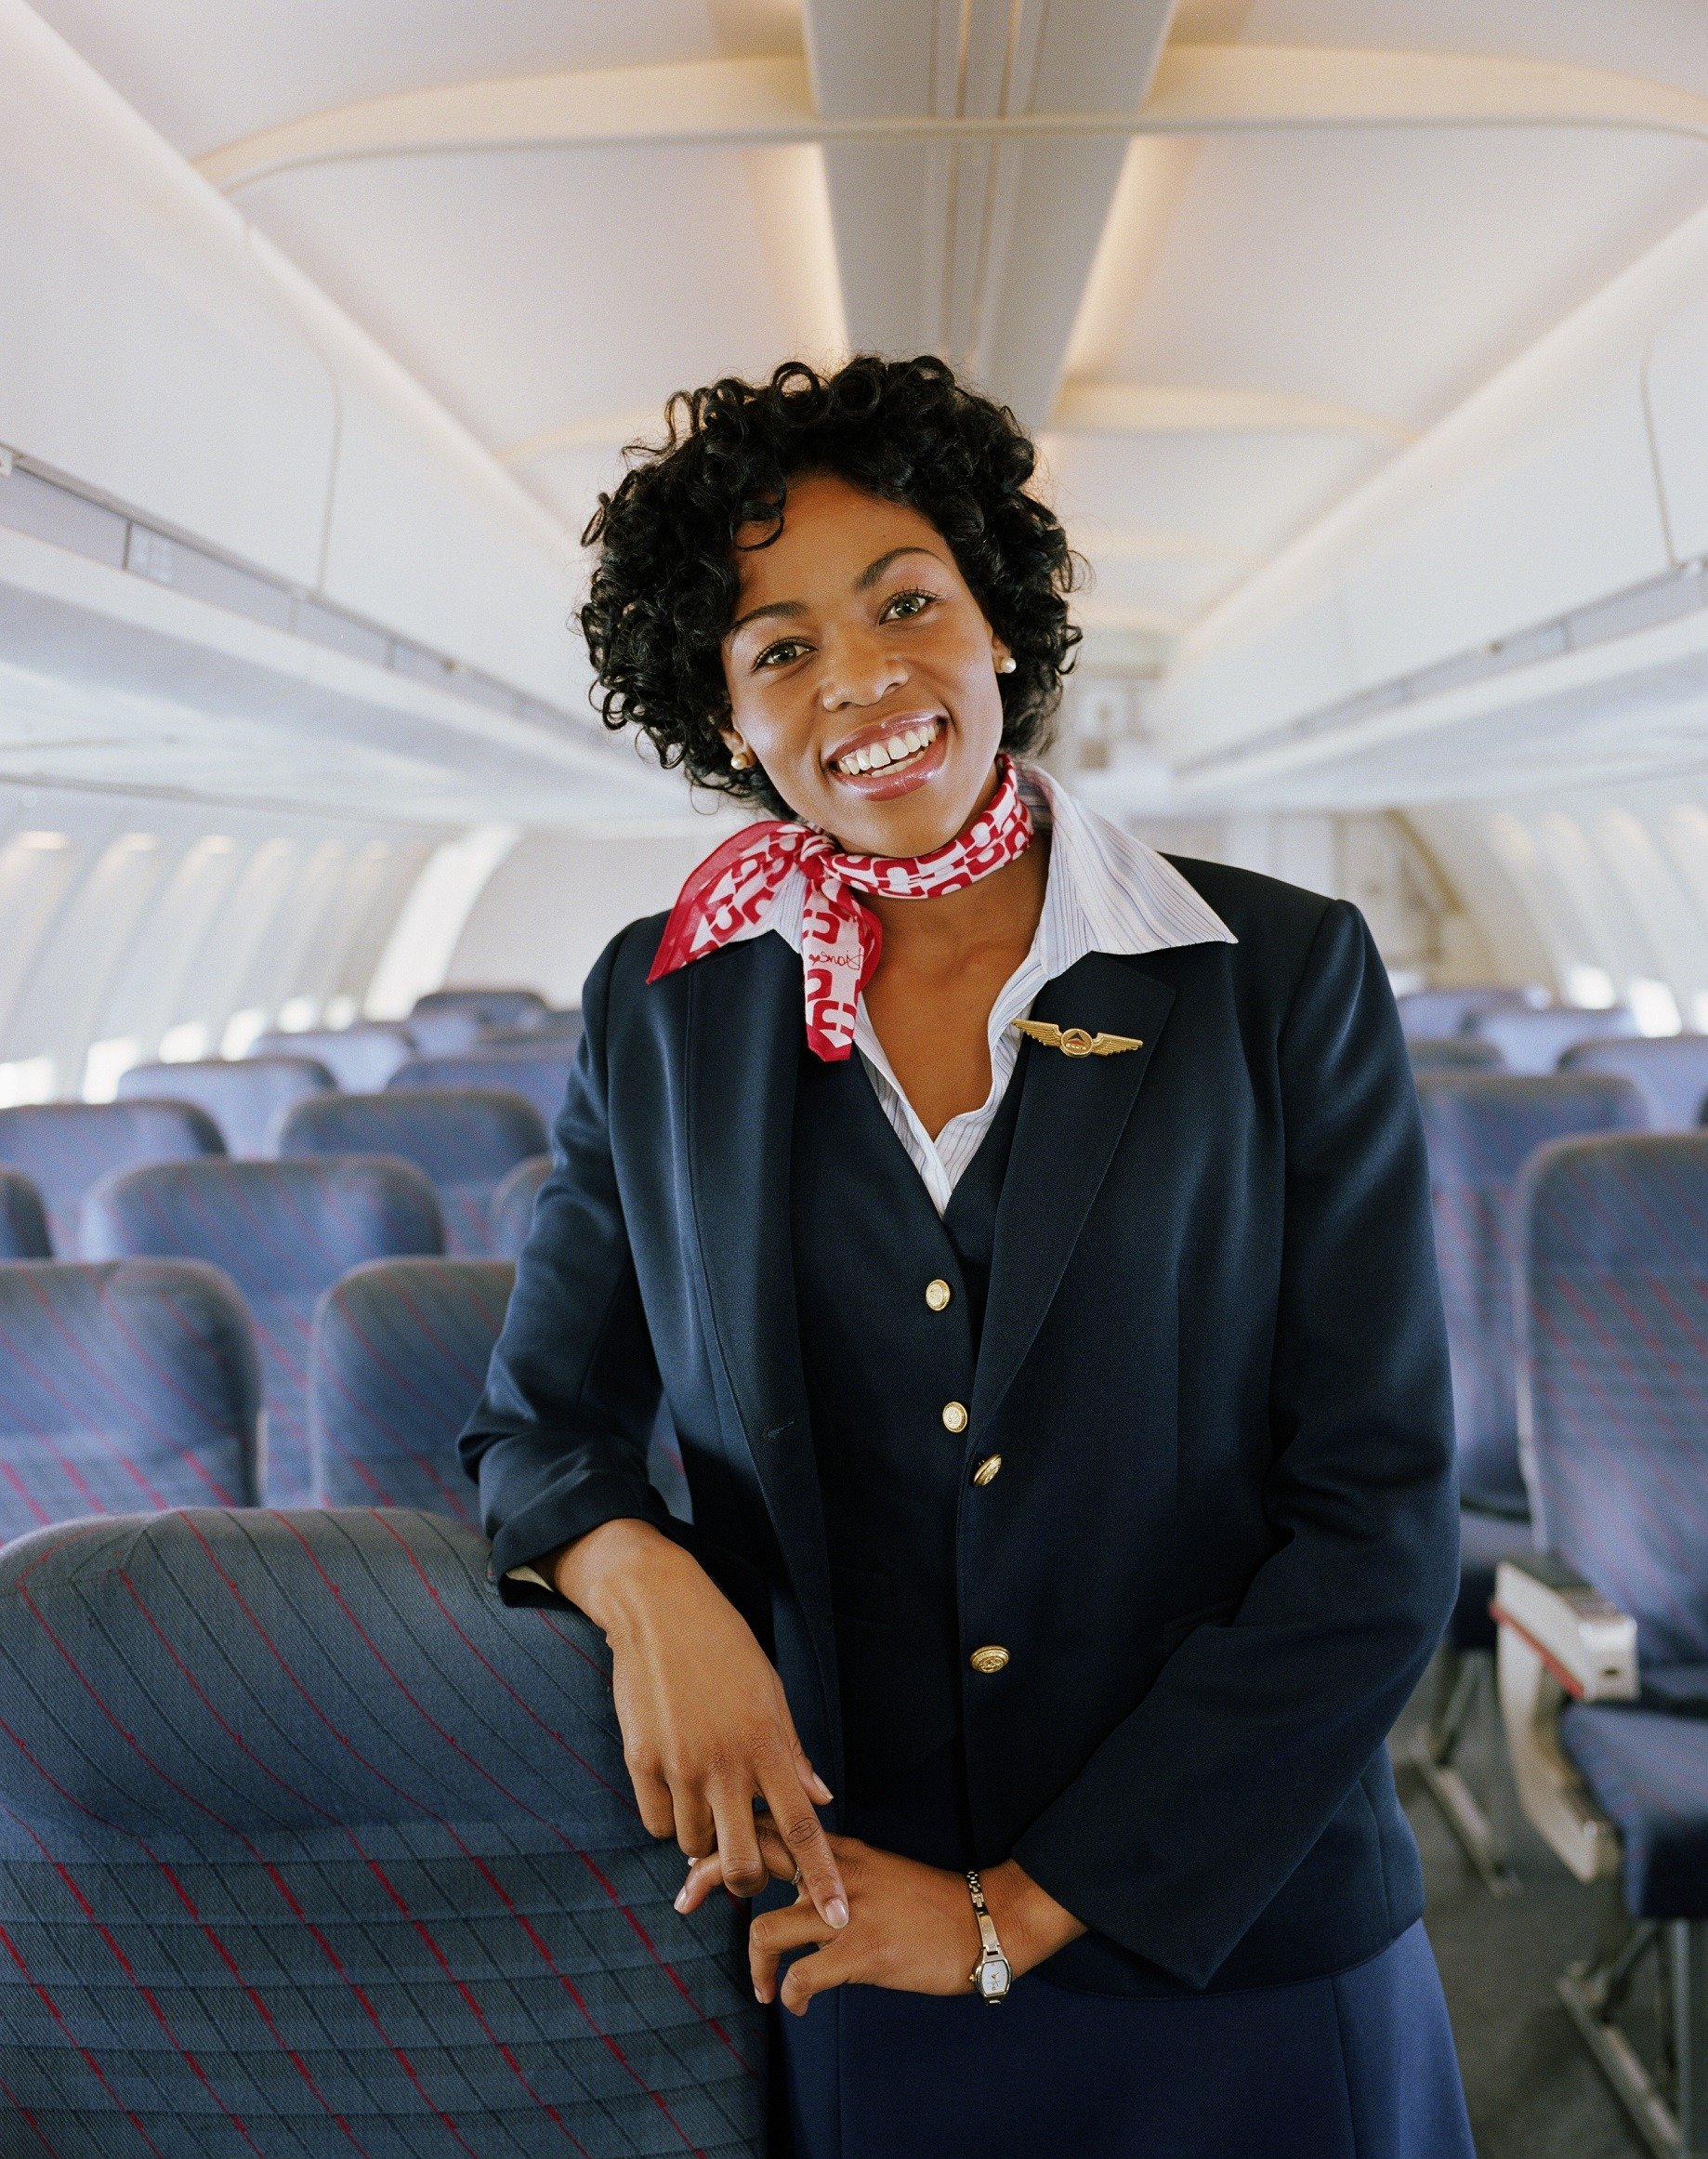 Woman flight attendant